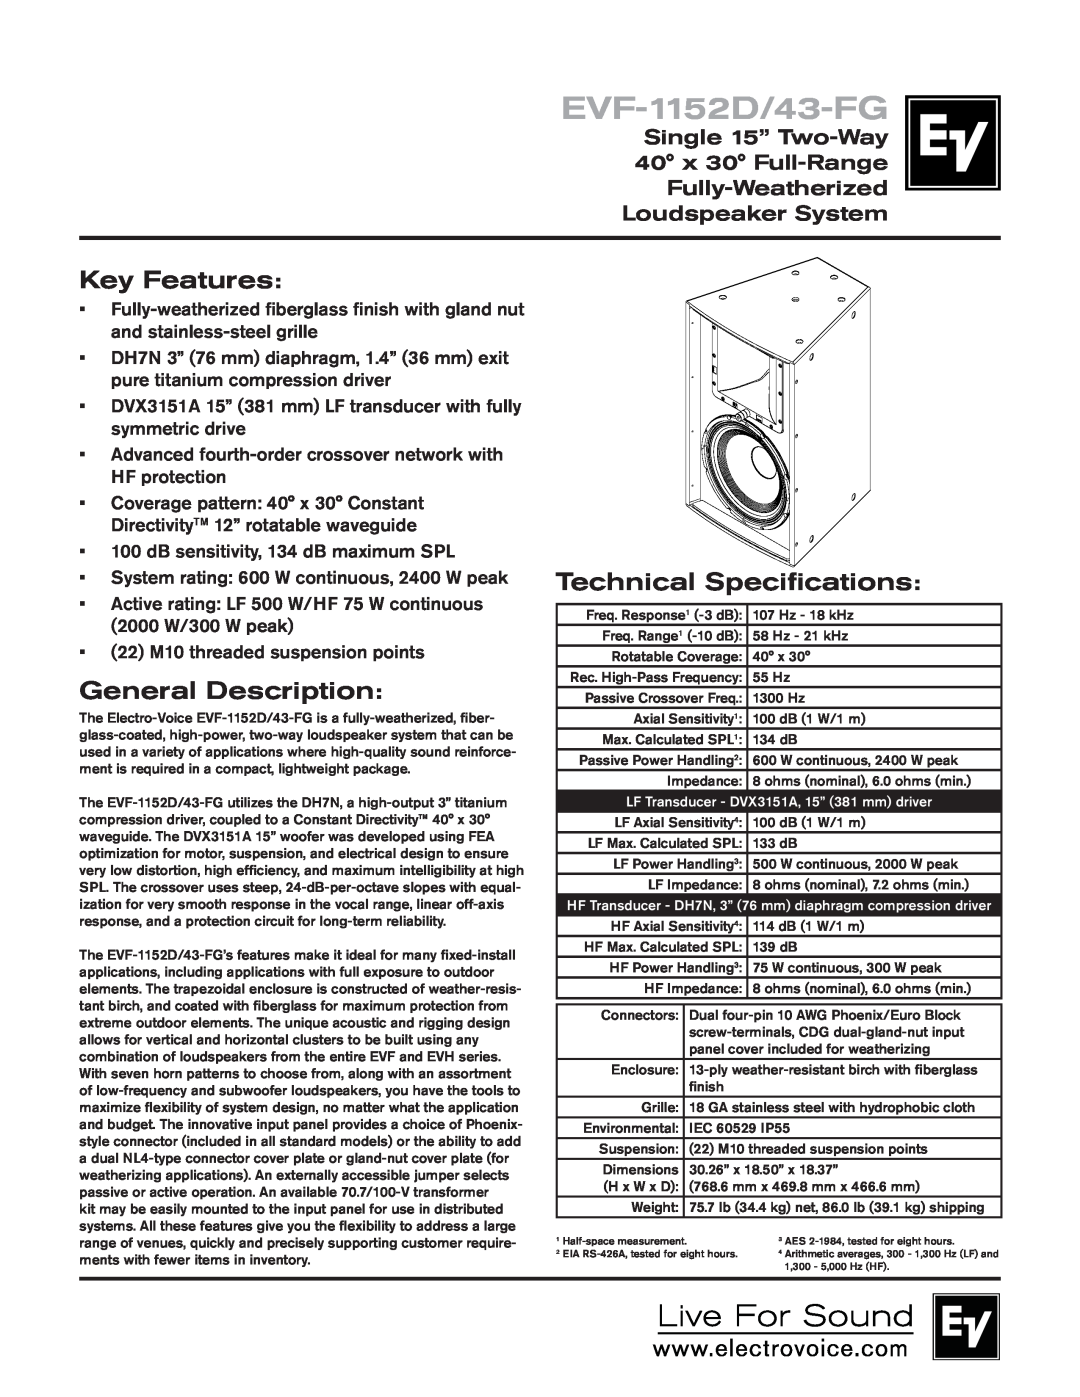 Bosch Appliances EVF-1152D/43-FG technical specifications Key Features, General Description, Technical Specifications 